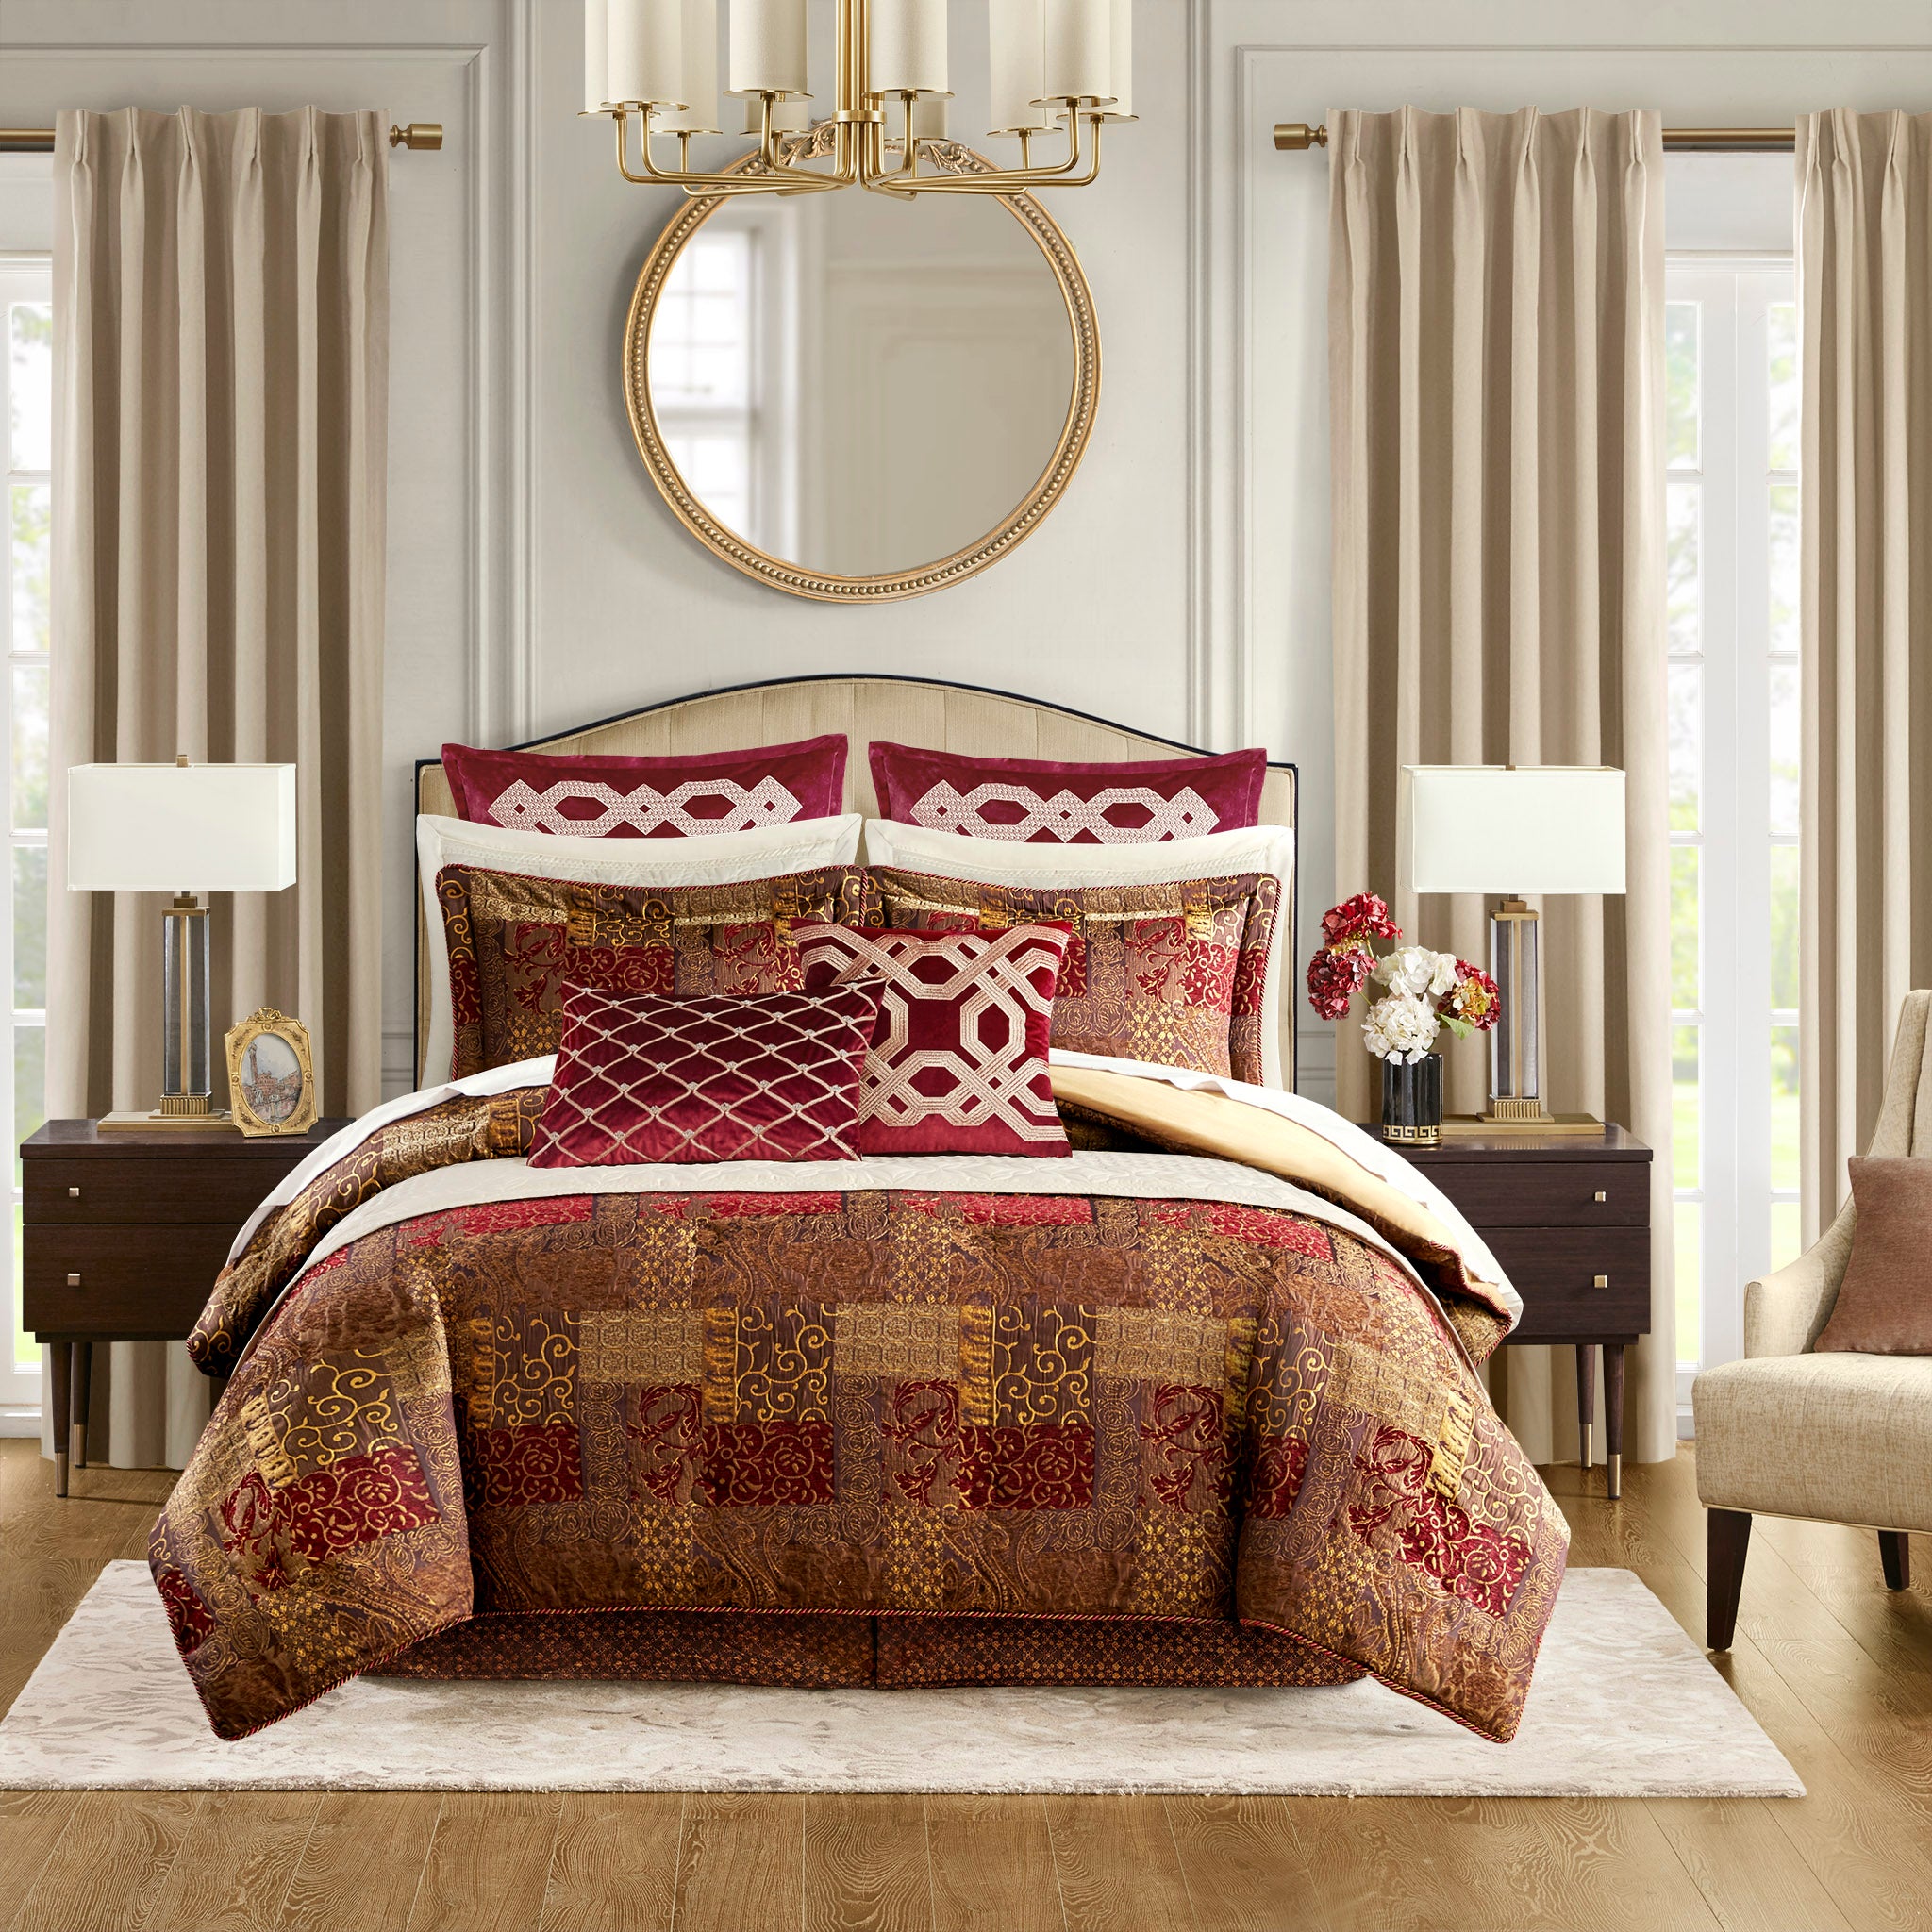 Red Classics Croscill Set Bedding Galleria - Comforter Online - Piece Croscill Store 4 – Adult/Fashion